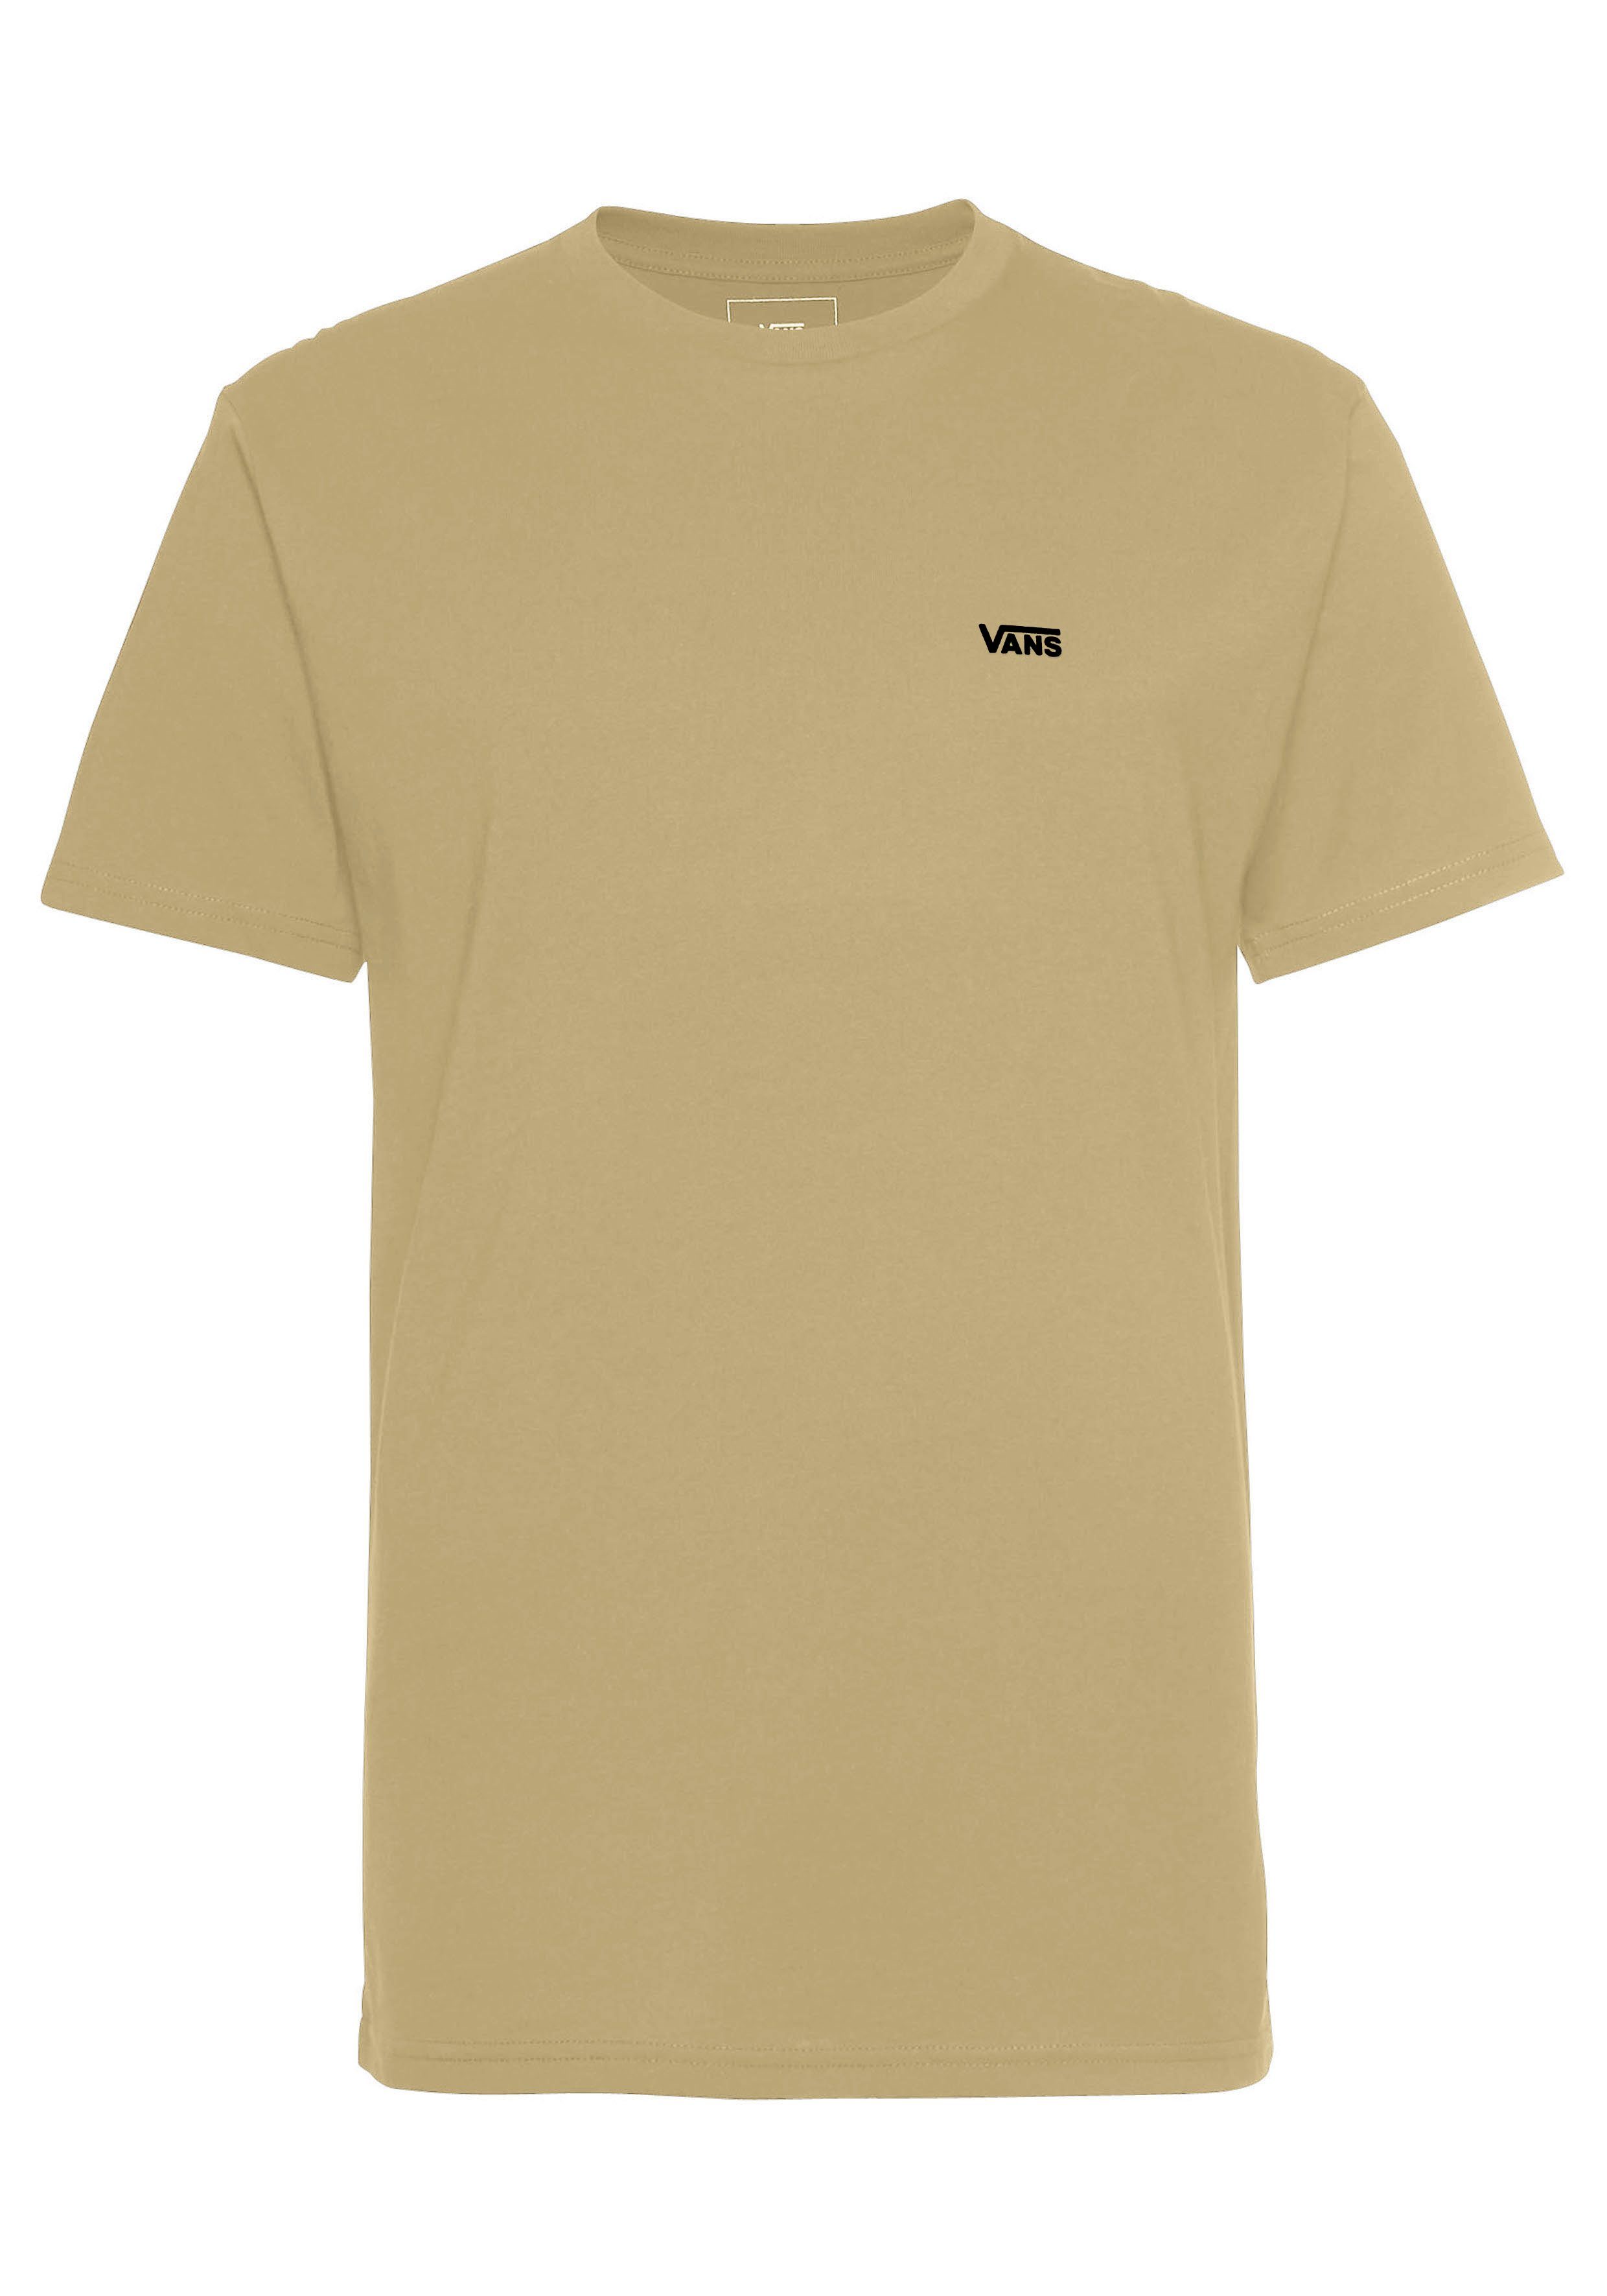 LEFT CHEST gelb Vans TEE T-Shirt LOGO